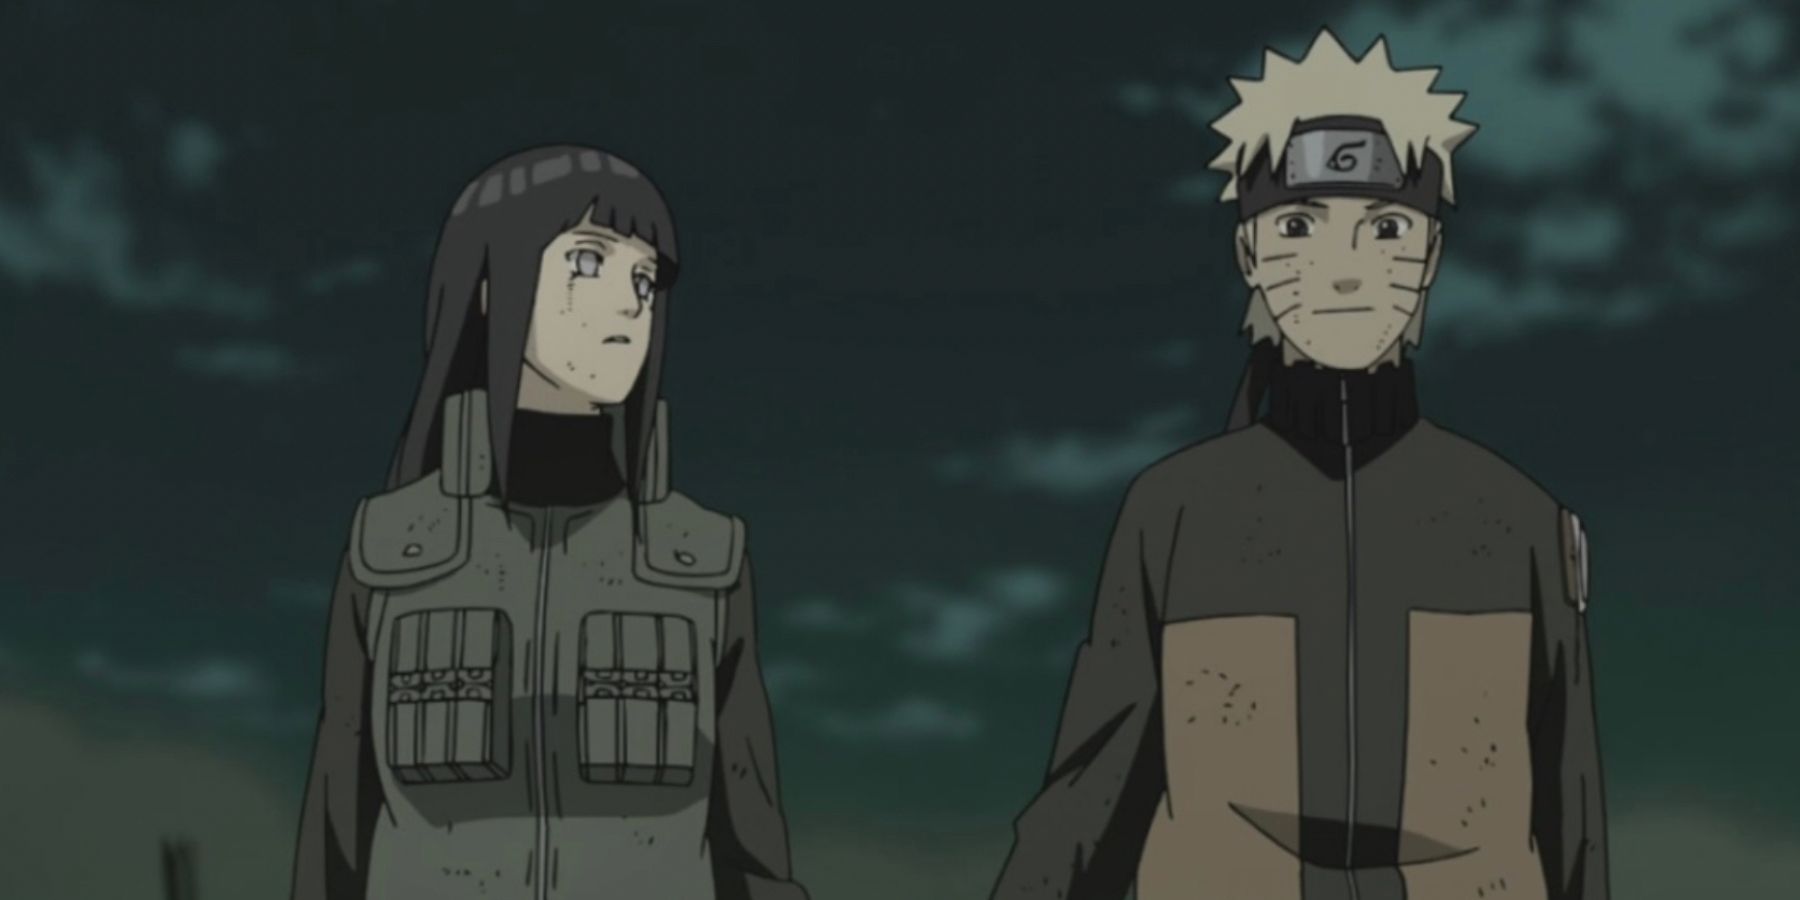 Hinata and Naruto together during the Fourth Shinobi World War